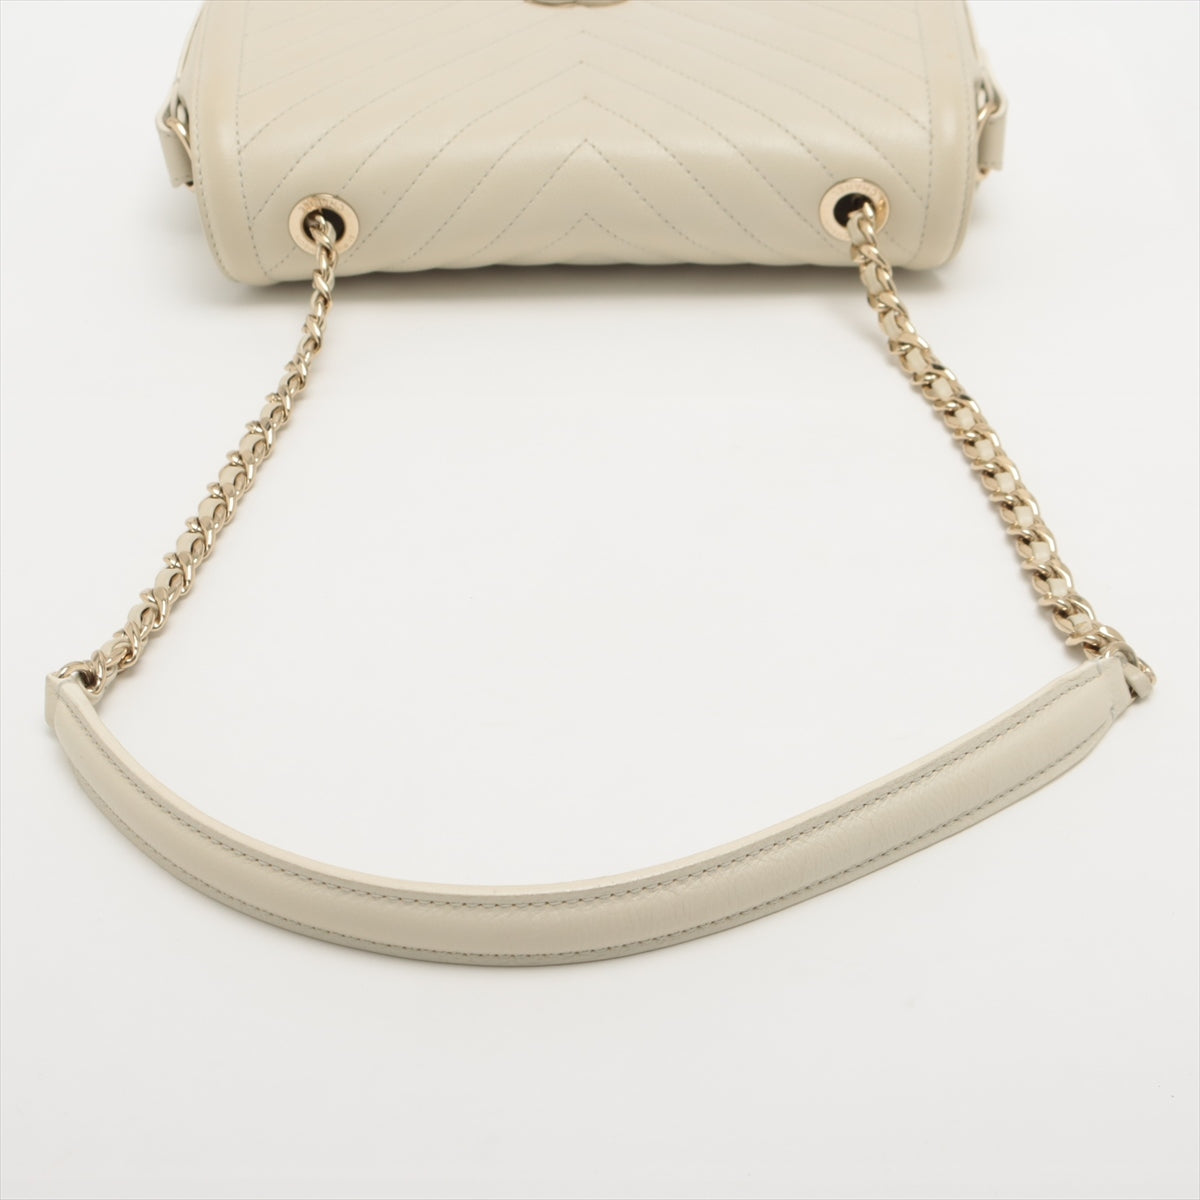 Chanel V Stitch Leather Single flap single chain bag Beige Gold Metal fittings 26XXXXXX